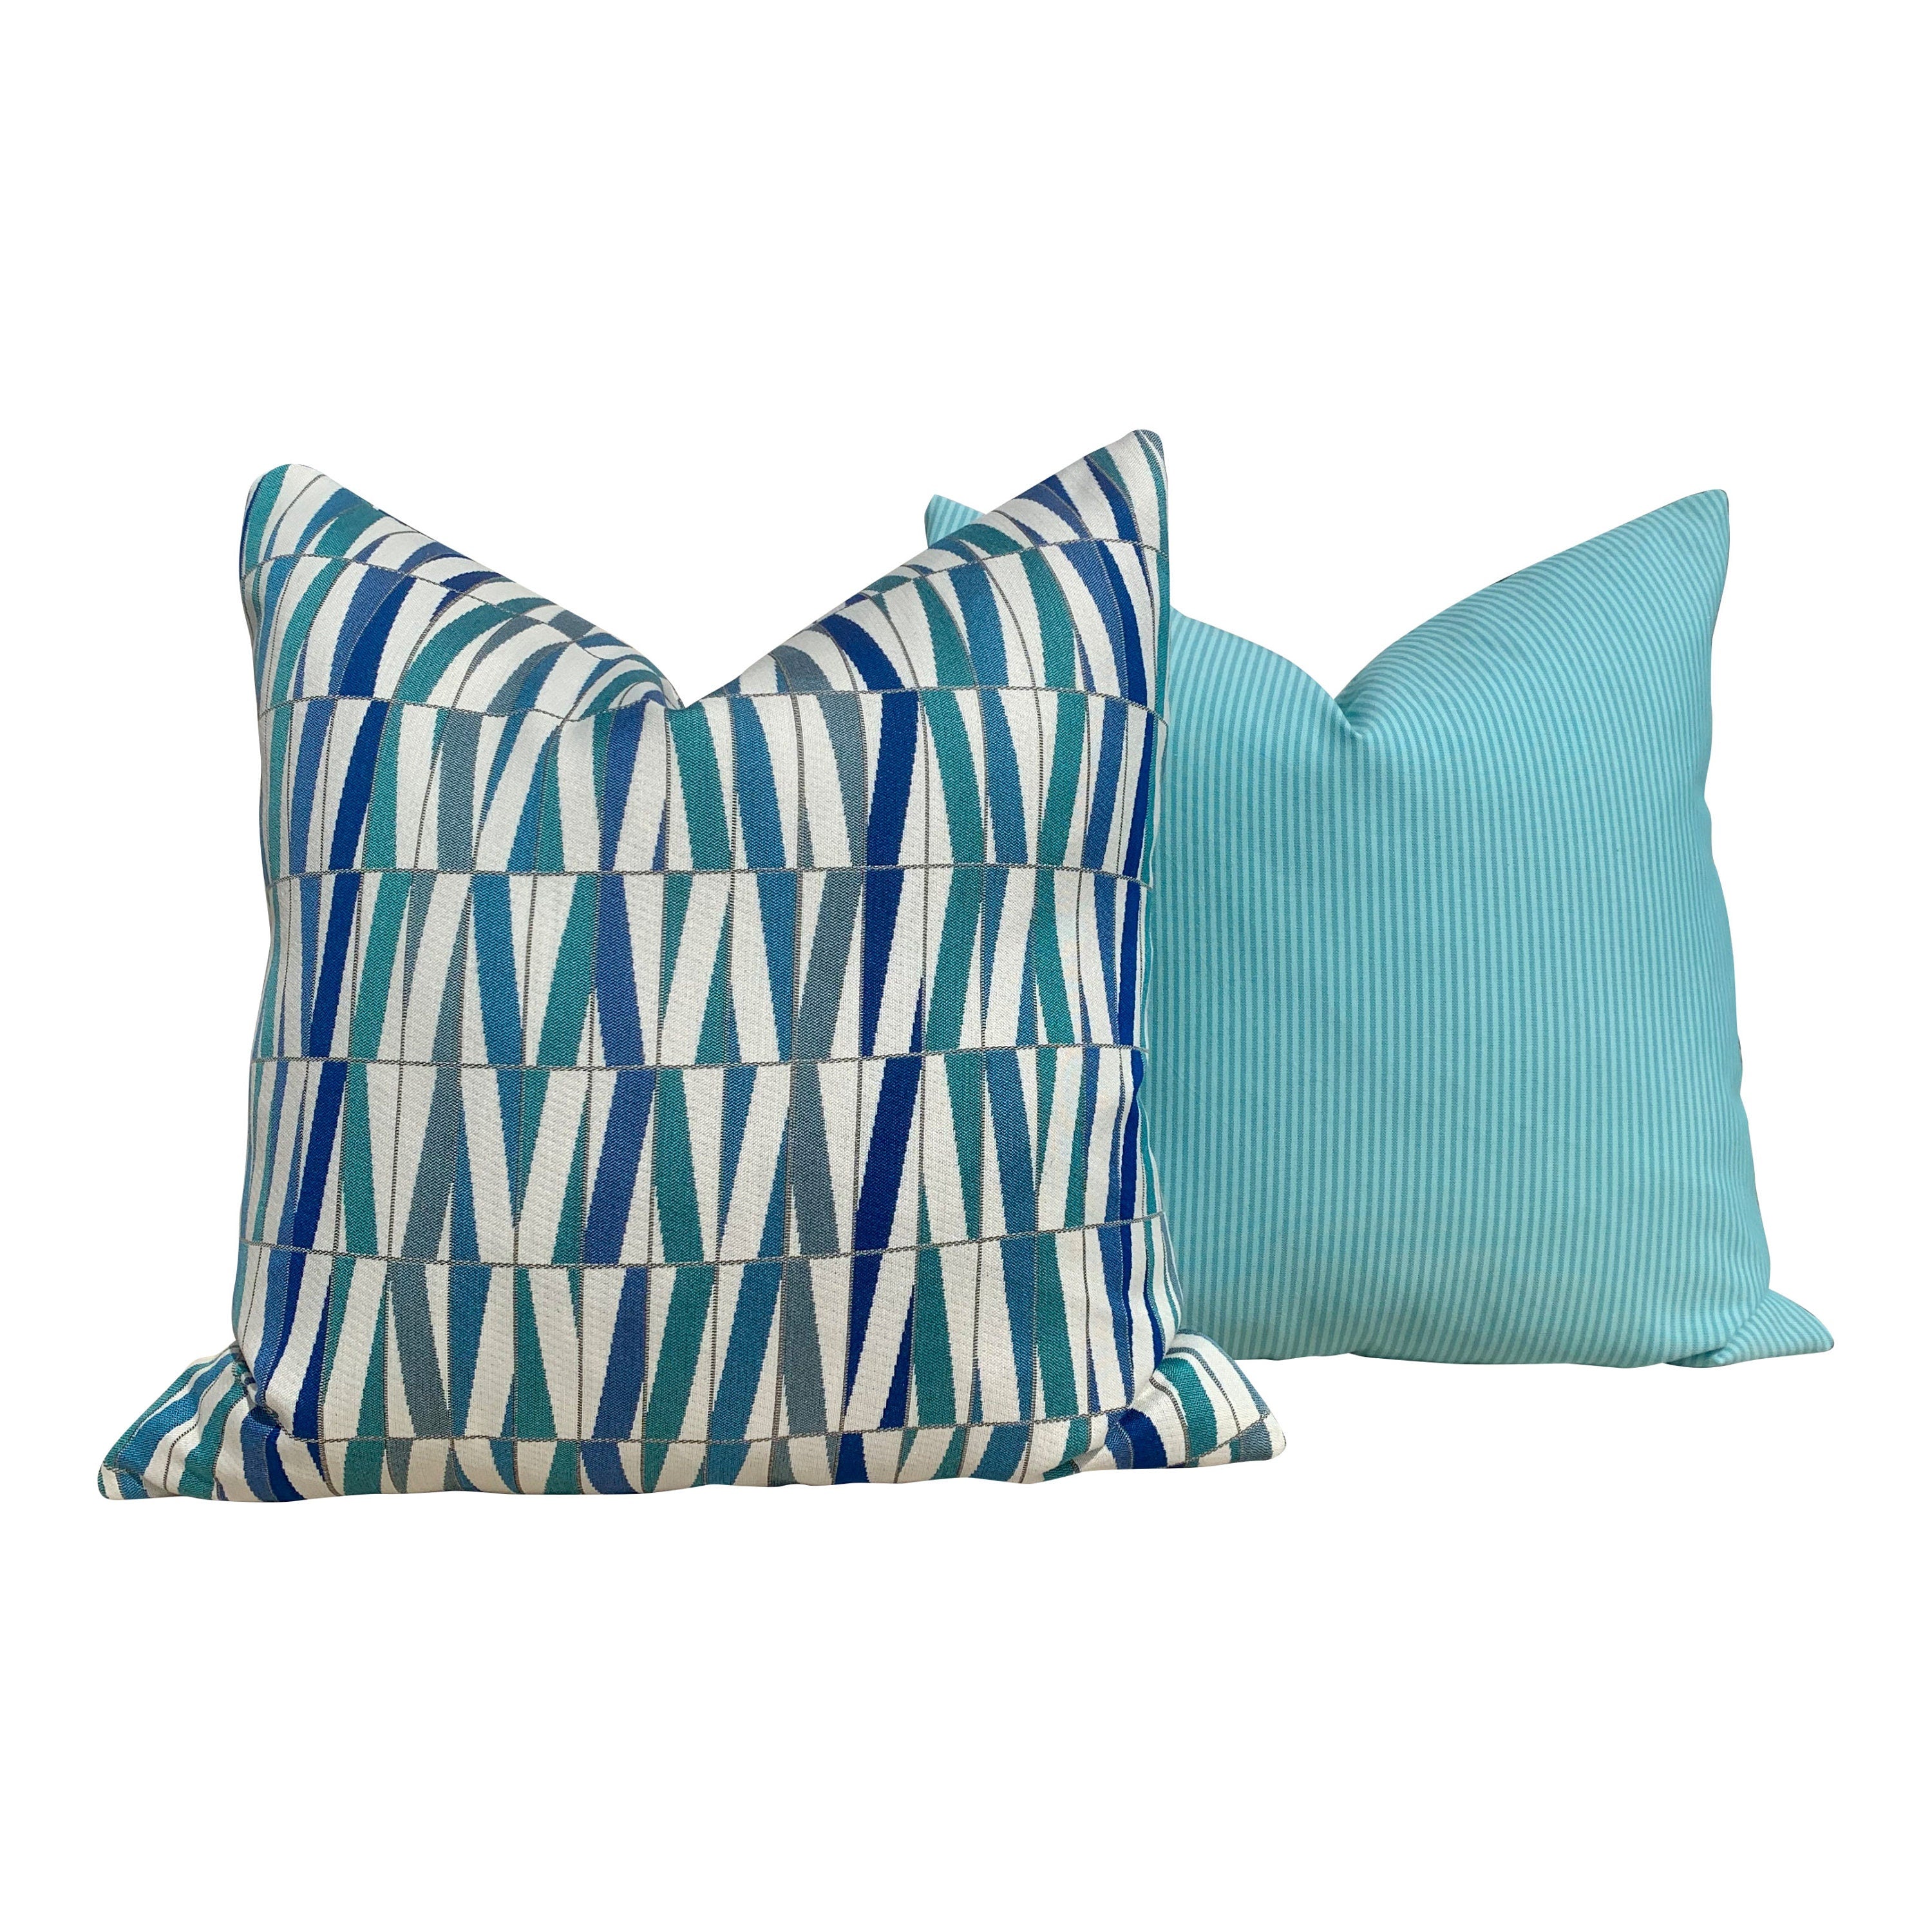 Sunbrella Outdoor Indoor Geometric Pillow  in Aqua. Lumbar Outdoor Pillow in Blue and Teal.